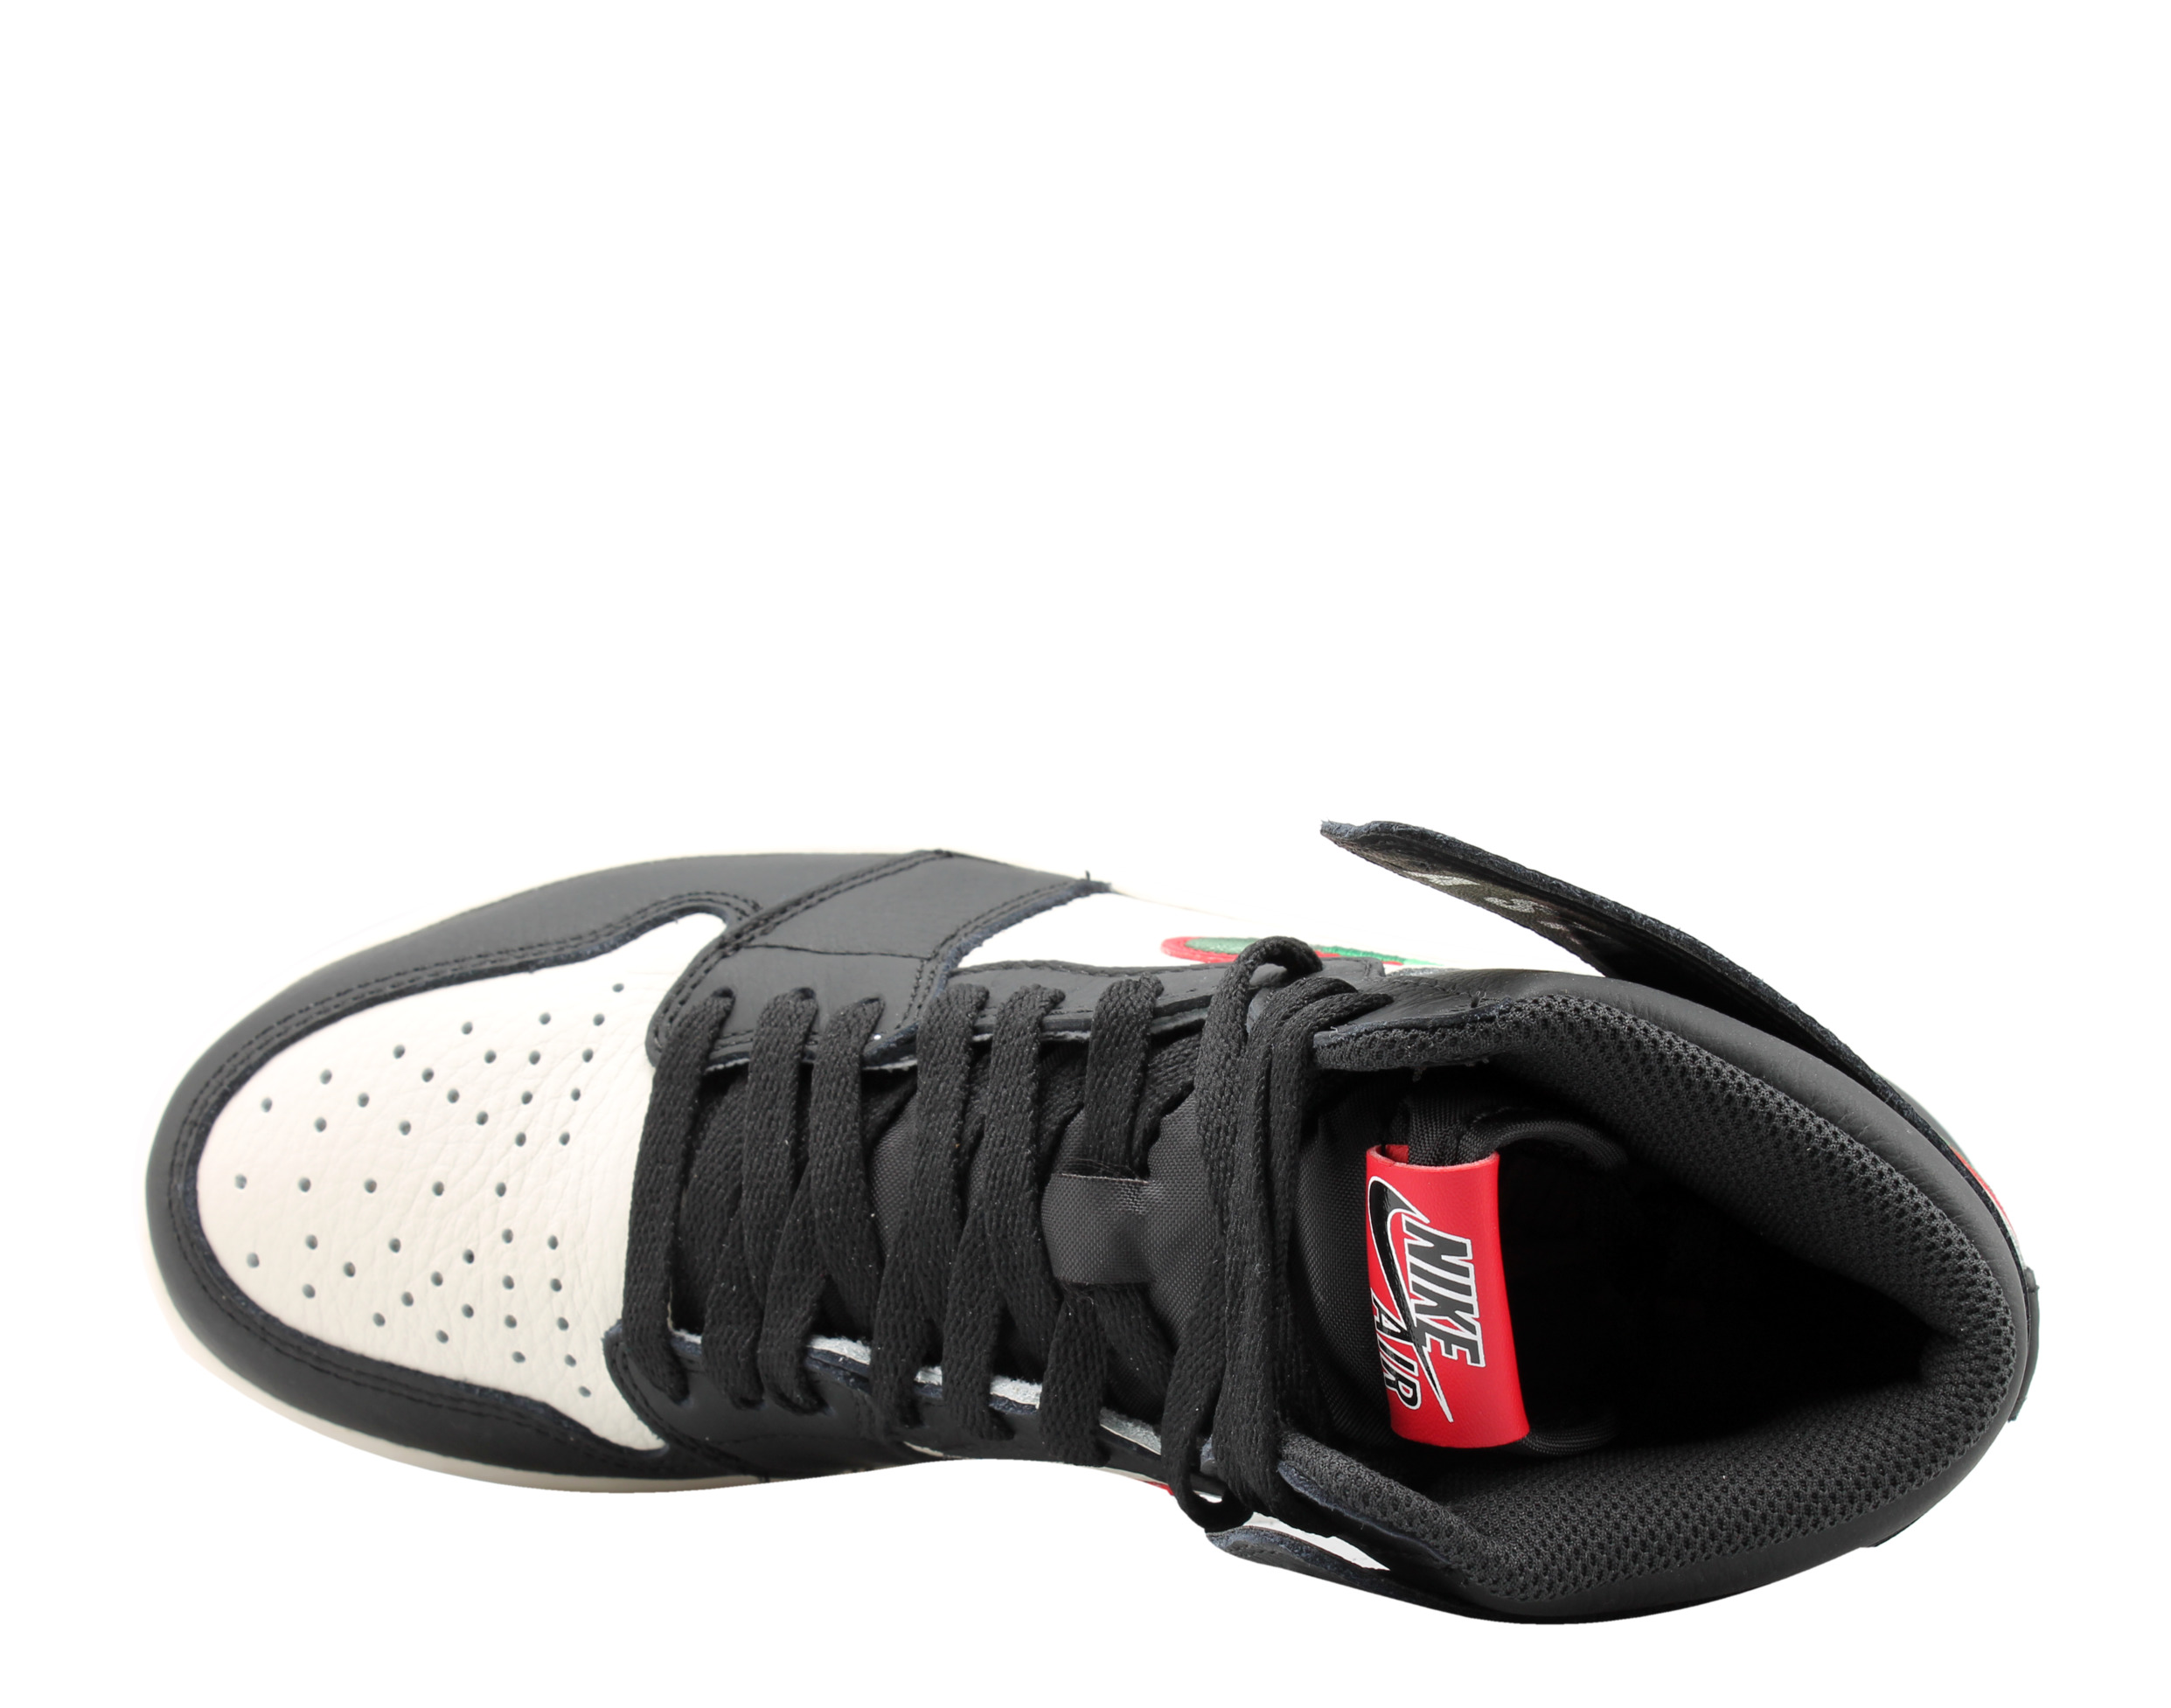 Nike Air Jordan 1 Retro High A Star Is Born Men's Basketball Shoes 555088-015 - image 4 of 6